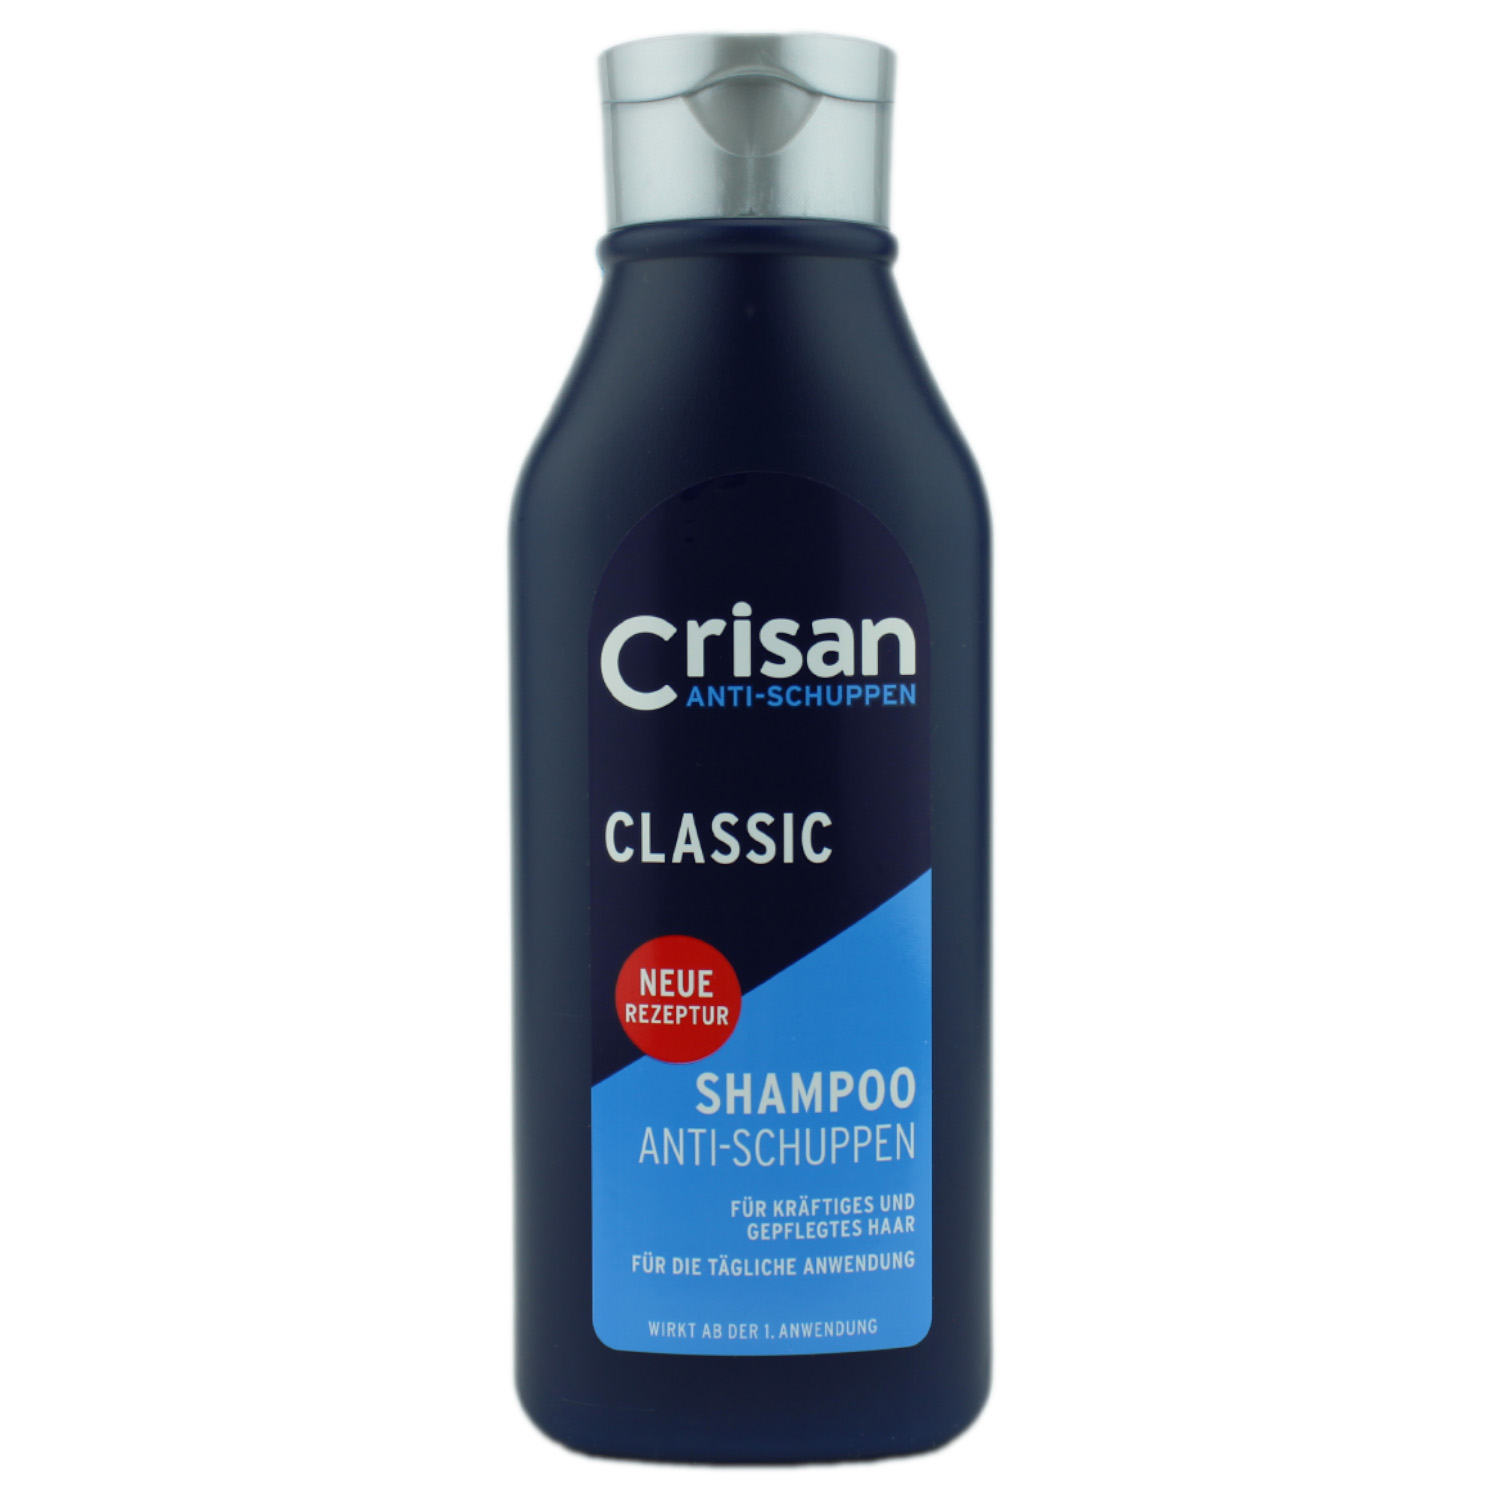 Crisan Anti-Schuppen Classic Shampoo für normales Haar 250ml